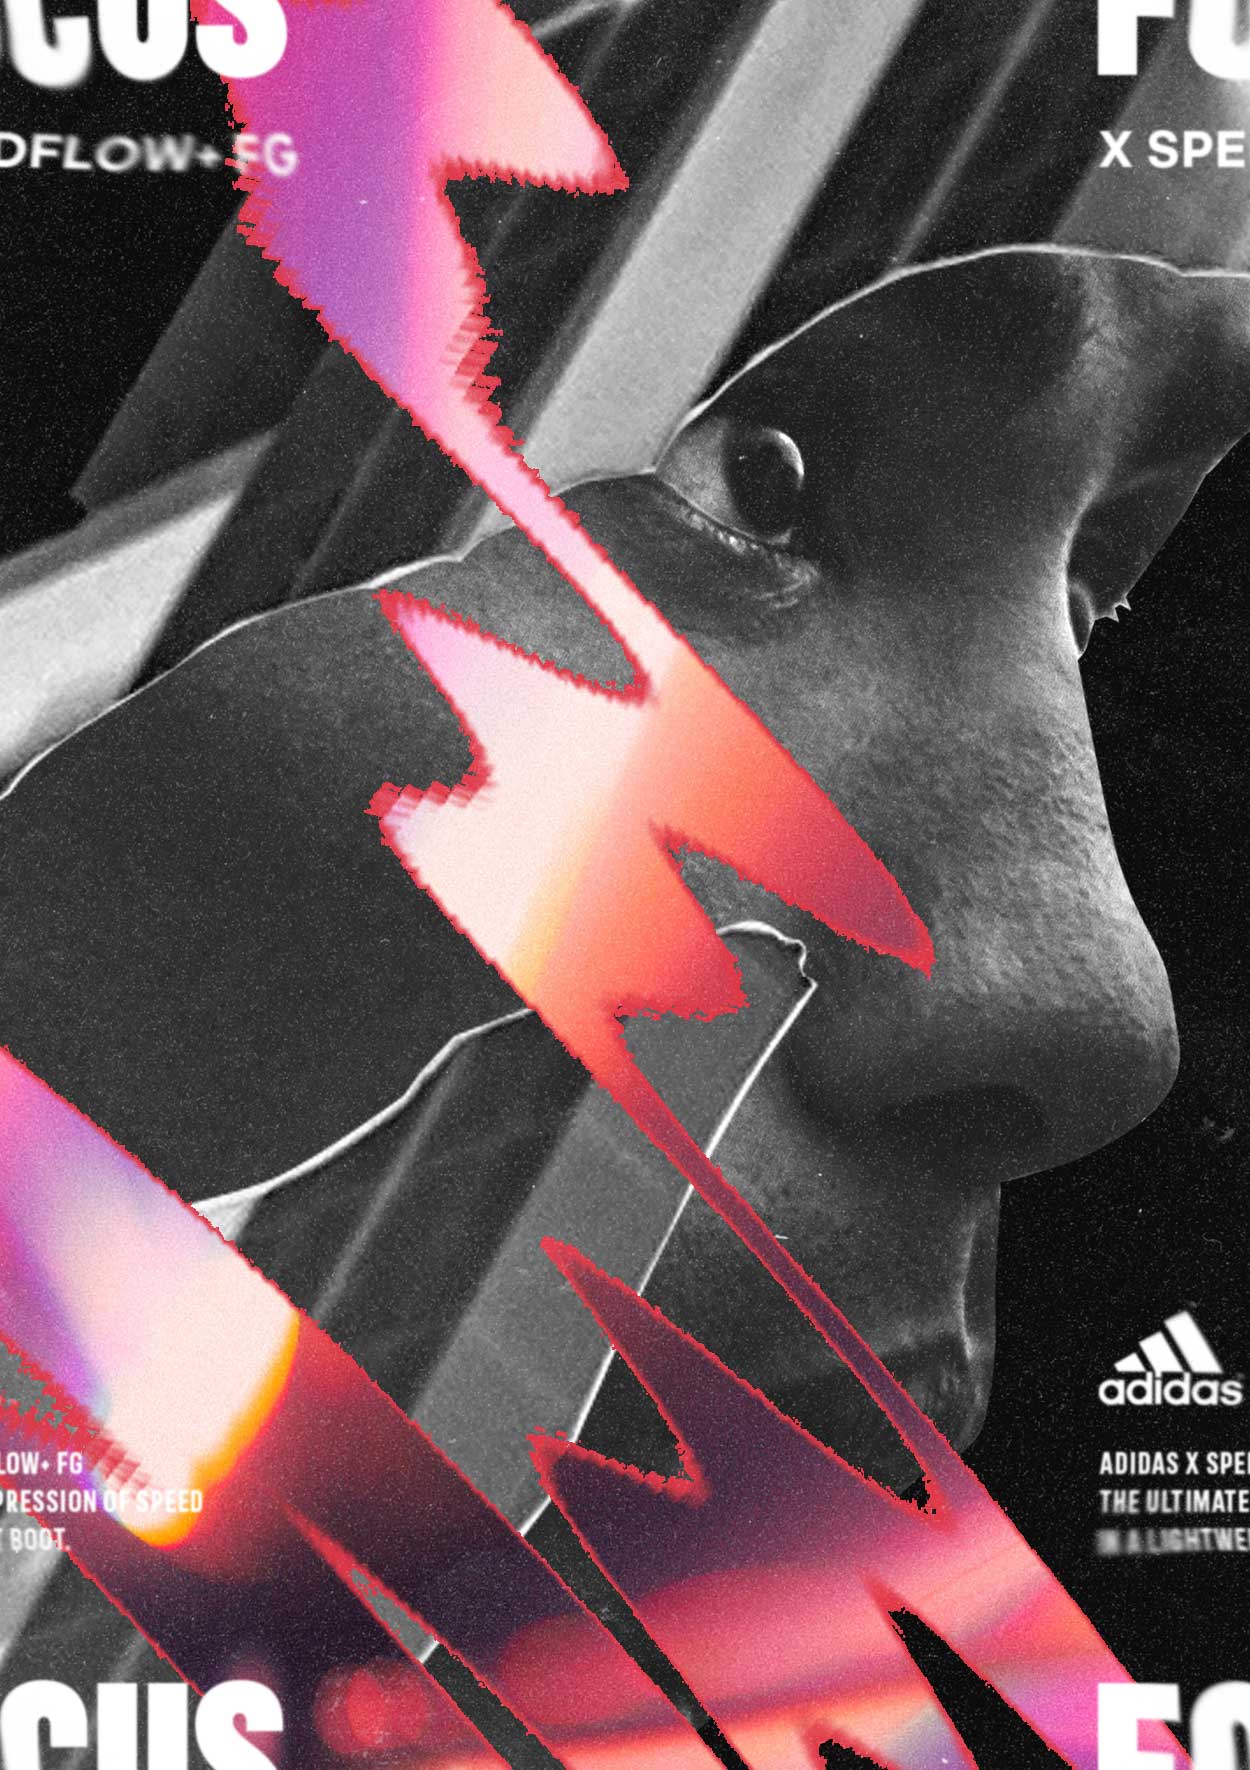 AdidasFootball_Concept_02_Poster_06_FlorianStumpe